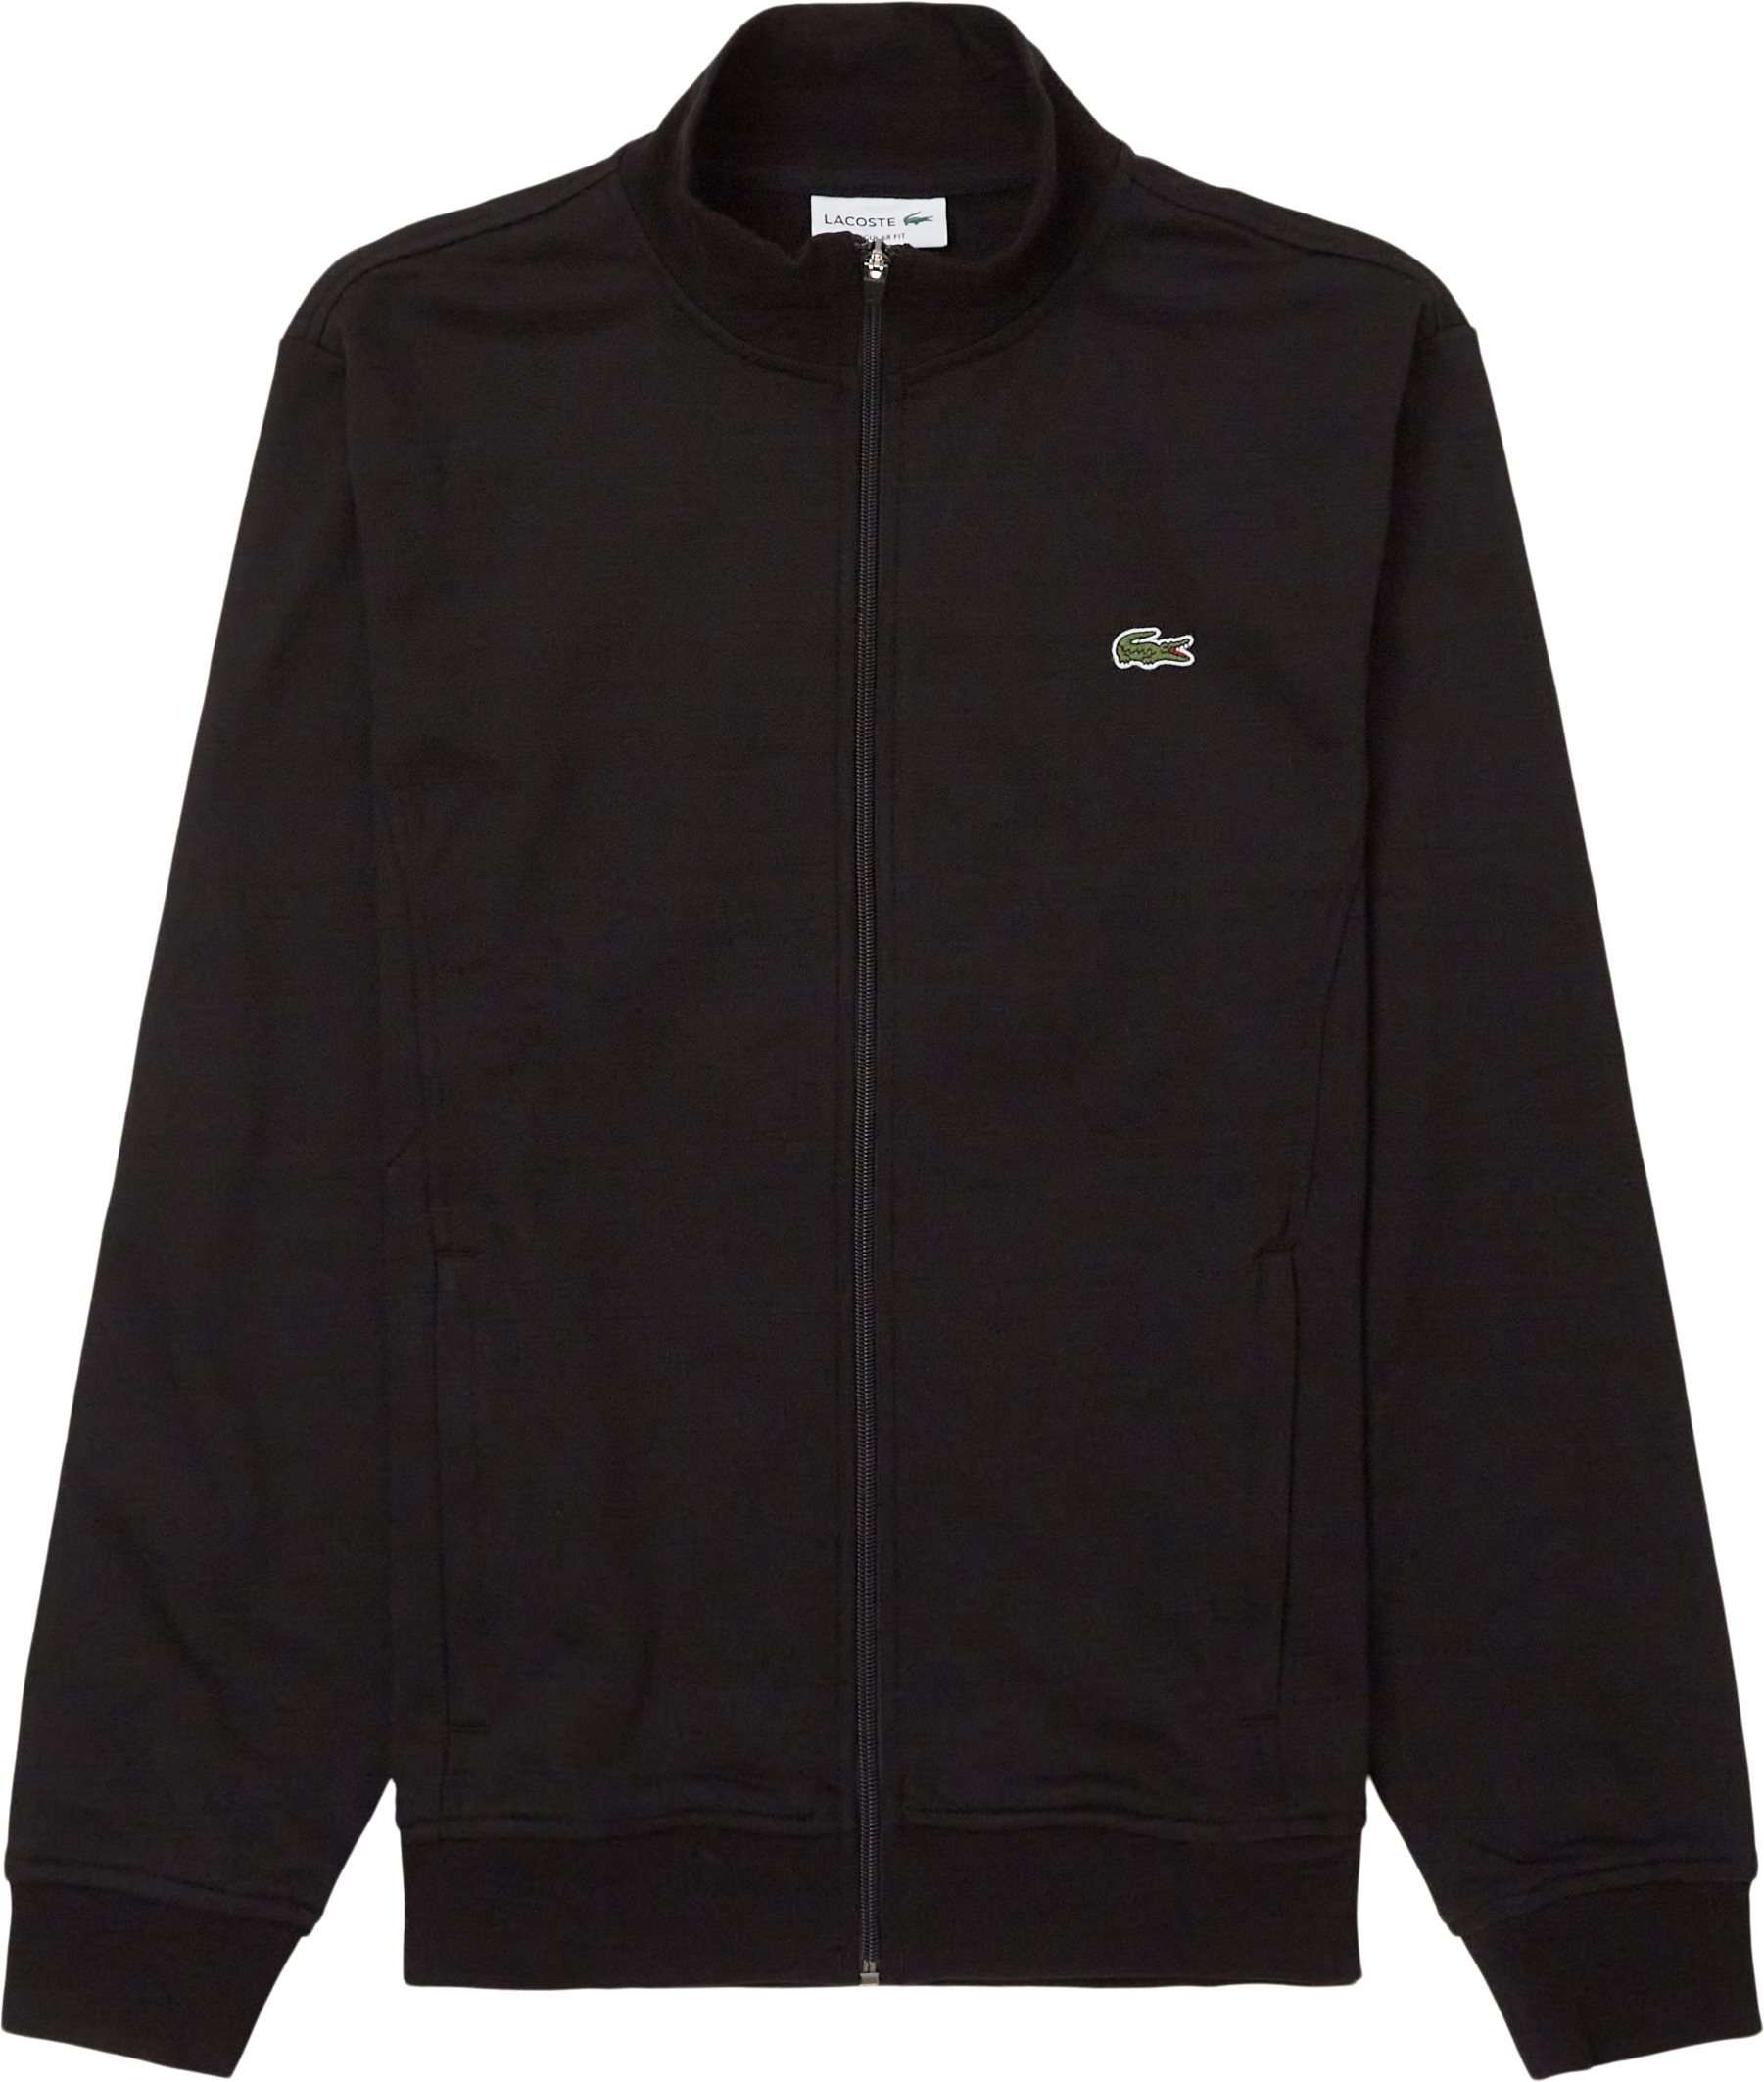 Sh1559 Zip Sweatshirt - Sweatshirts - Regular fit - Black